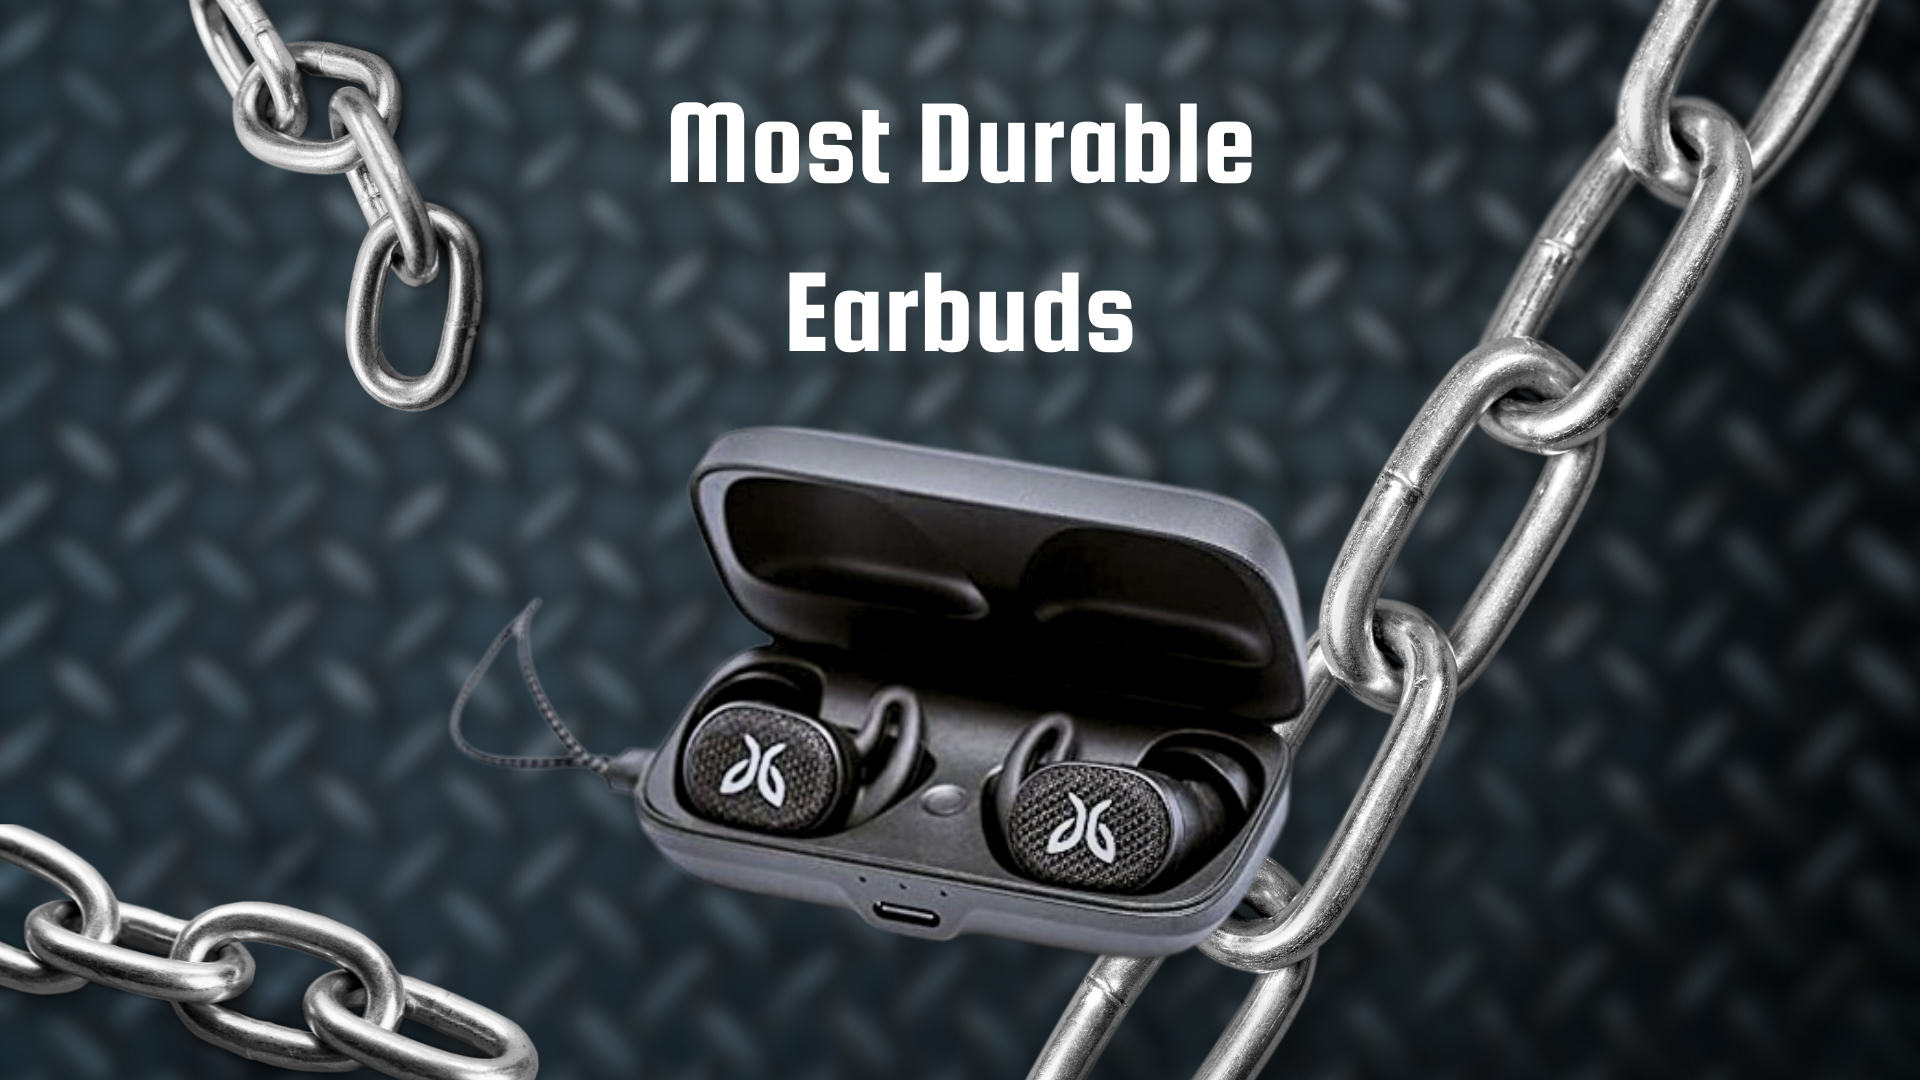 Jabra Elite 4 Active review: Durable earphones for anyone - SoundGuys